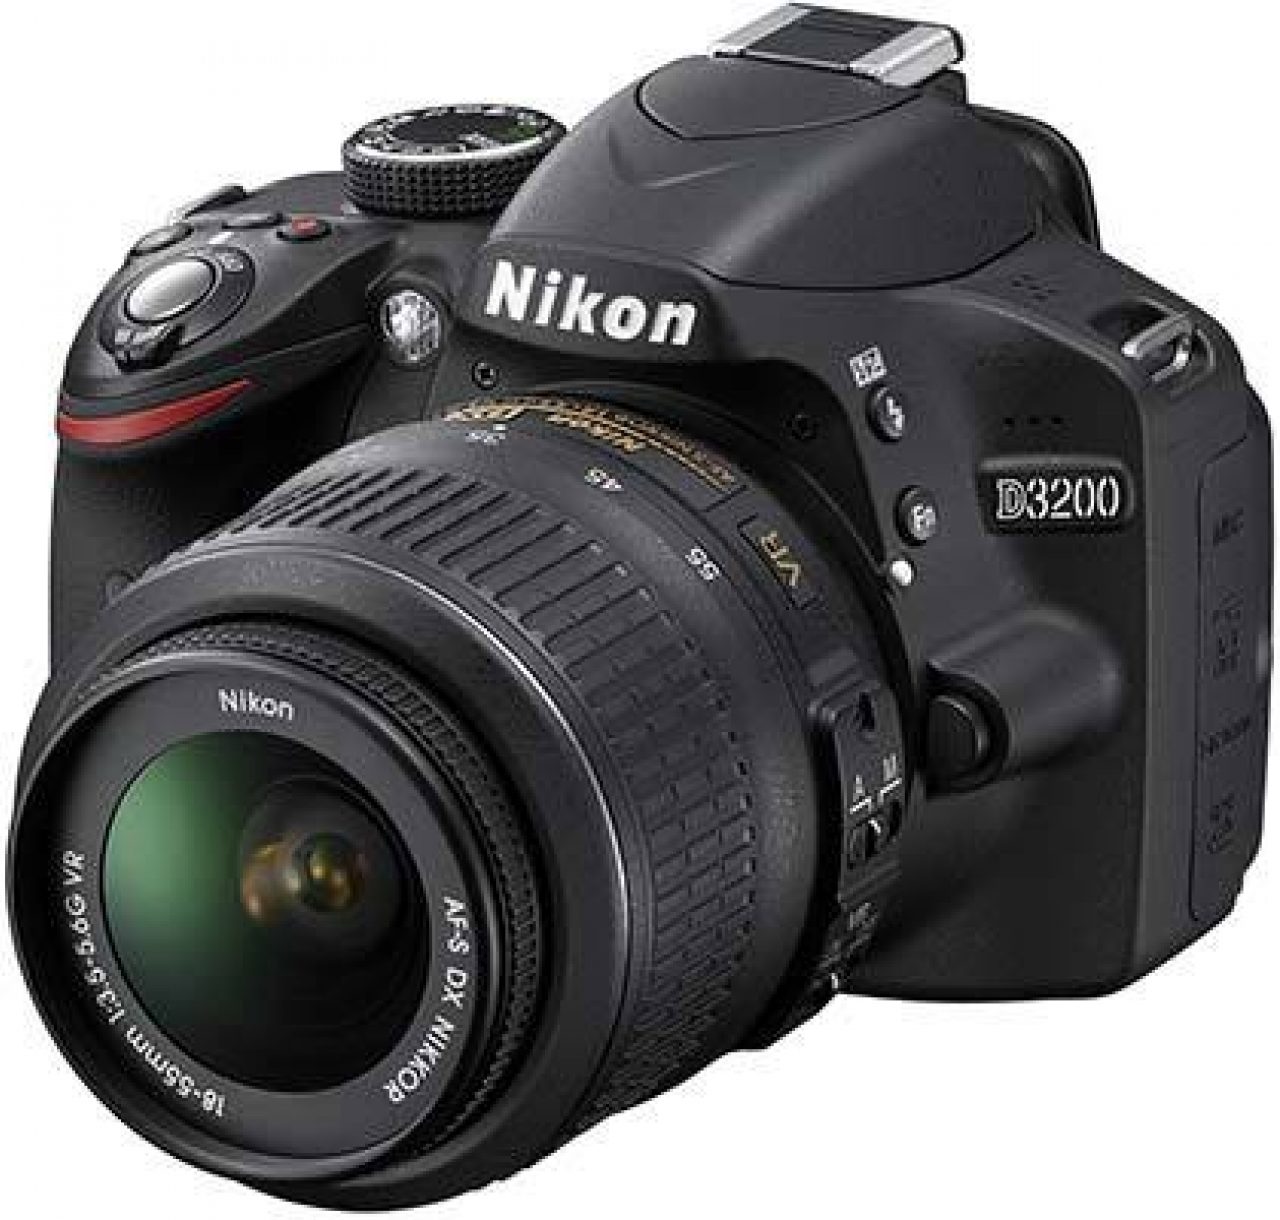 Nikon D3200 Review | Photography Blog